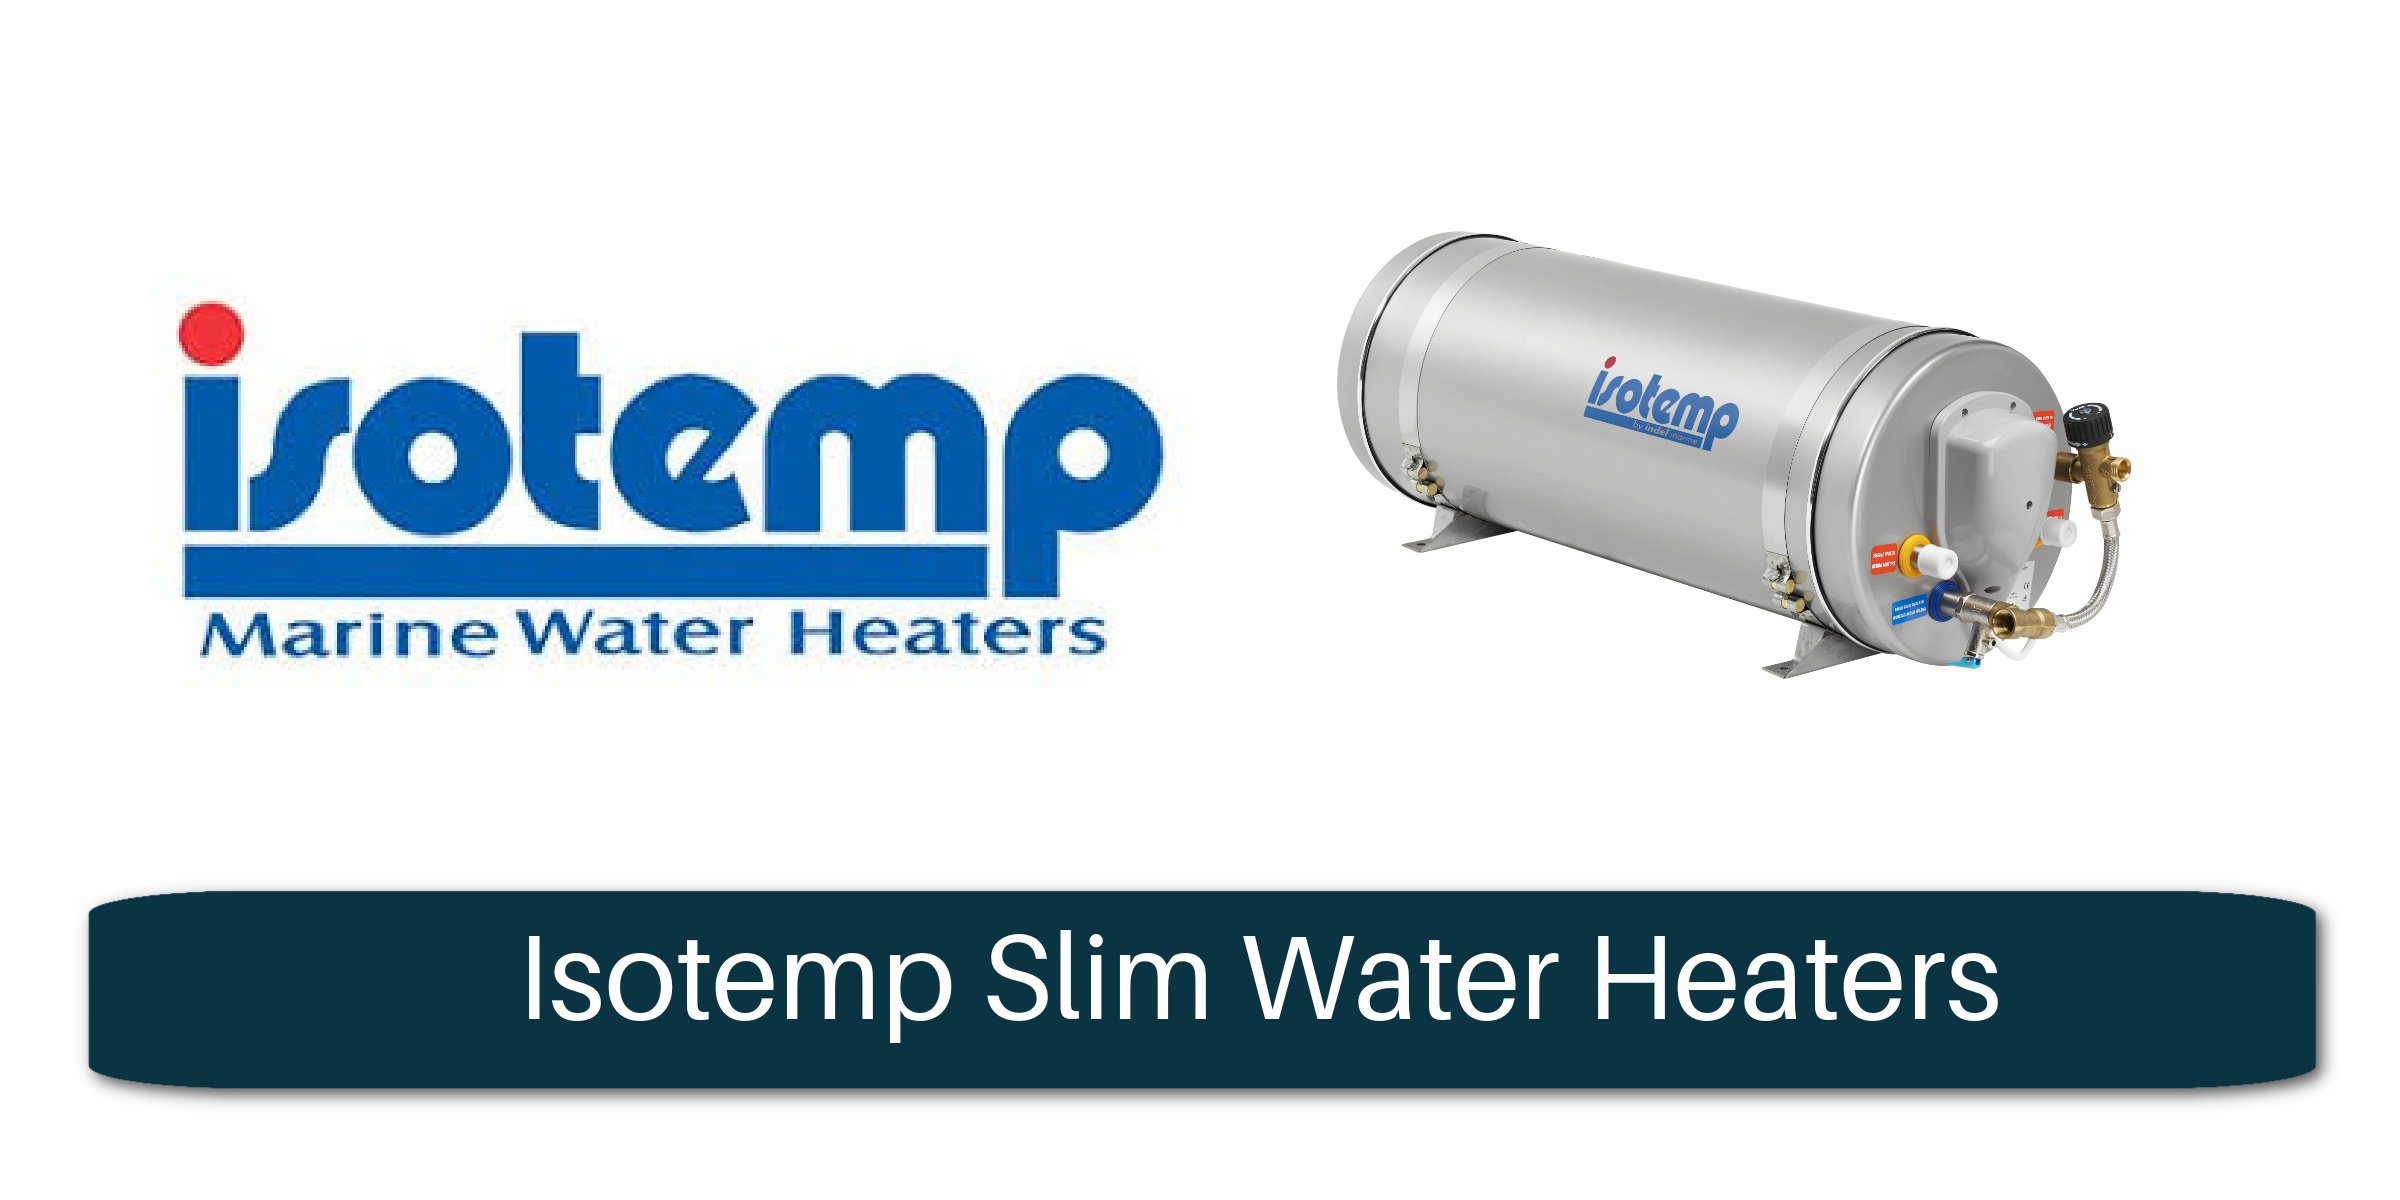 Isotemp Slim Water Heaters